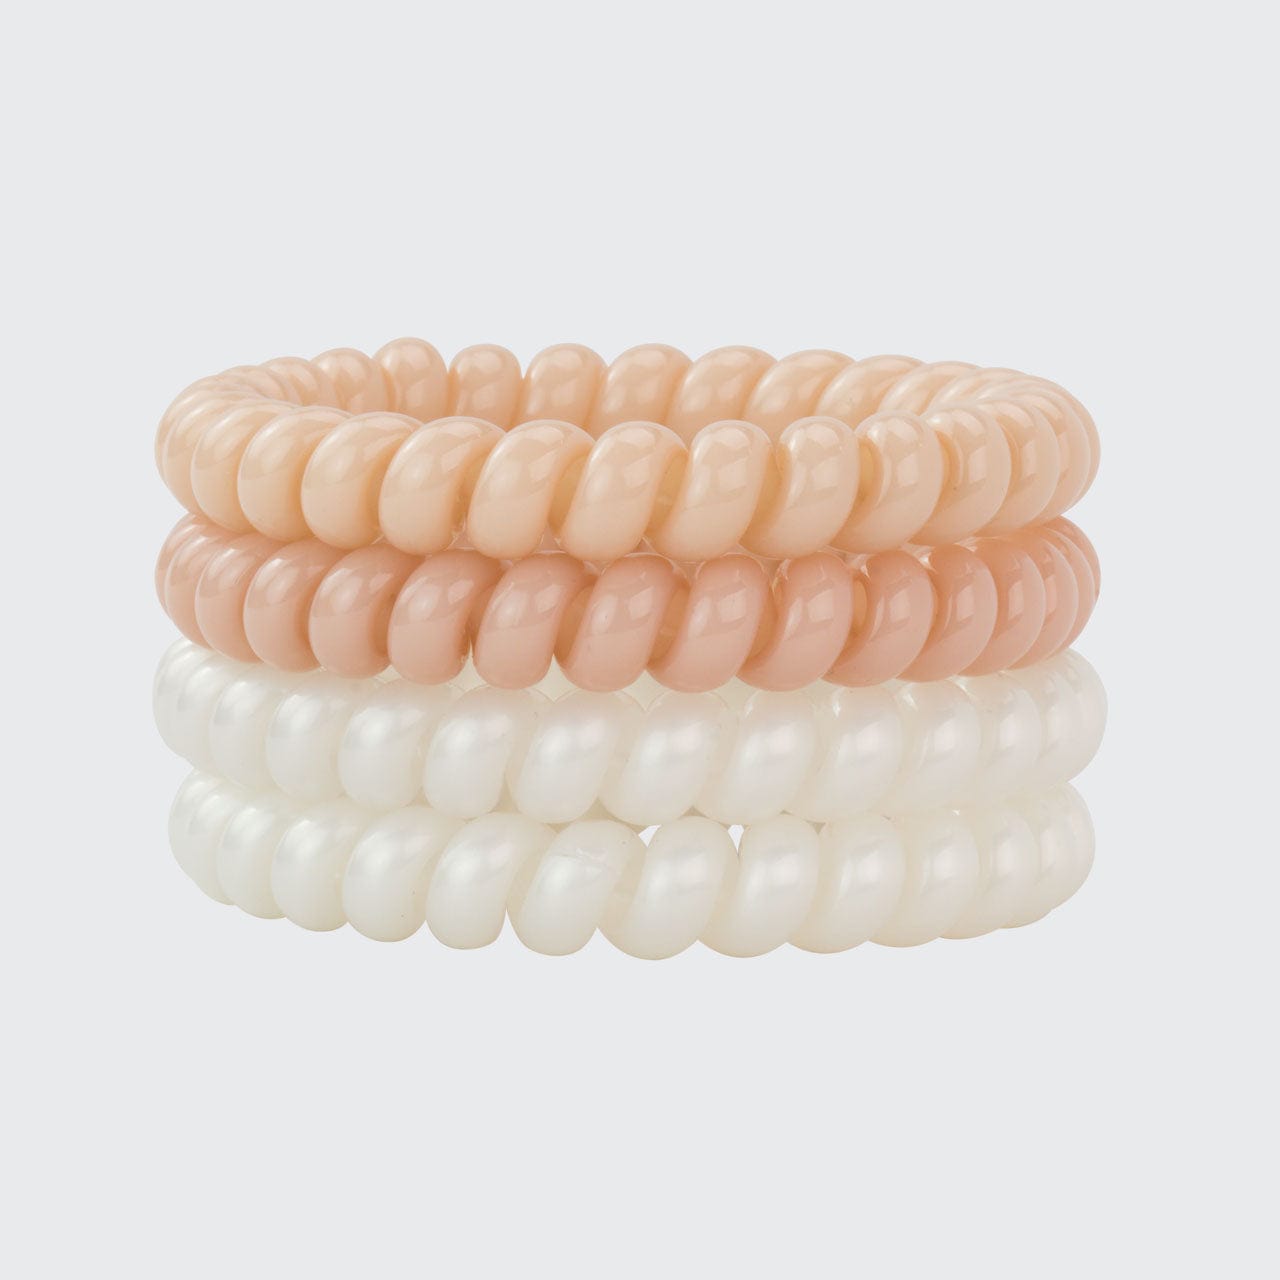 a stack of spiral shaped bracelets